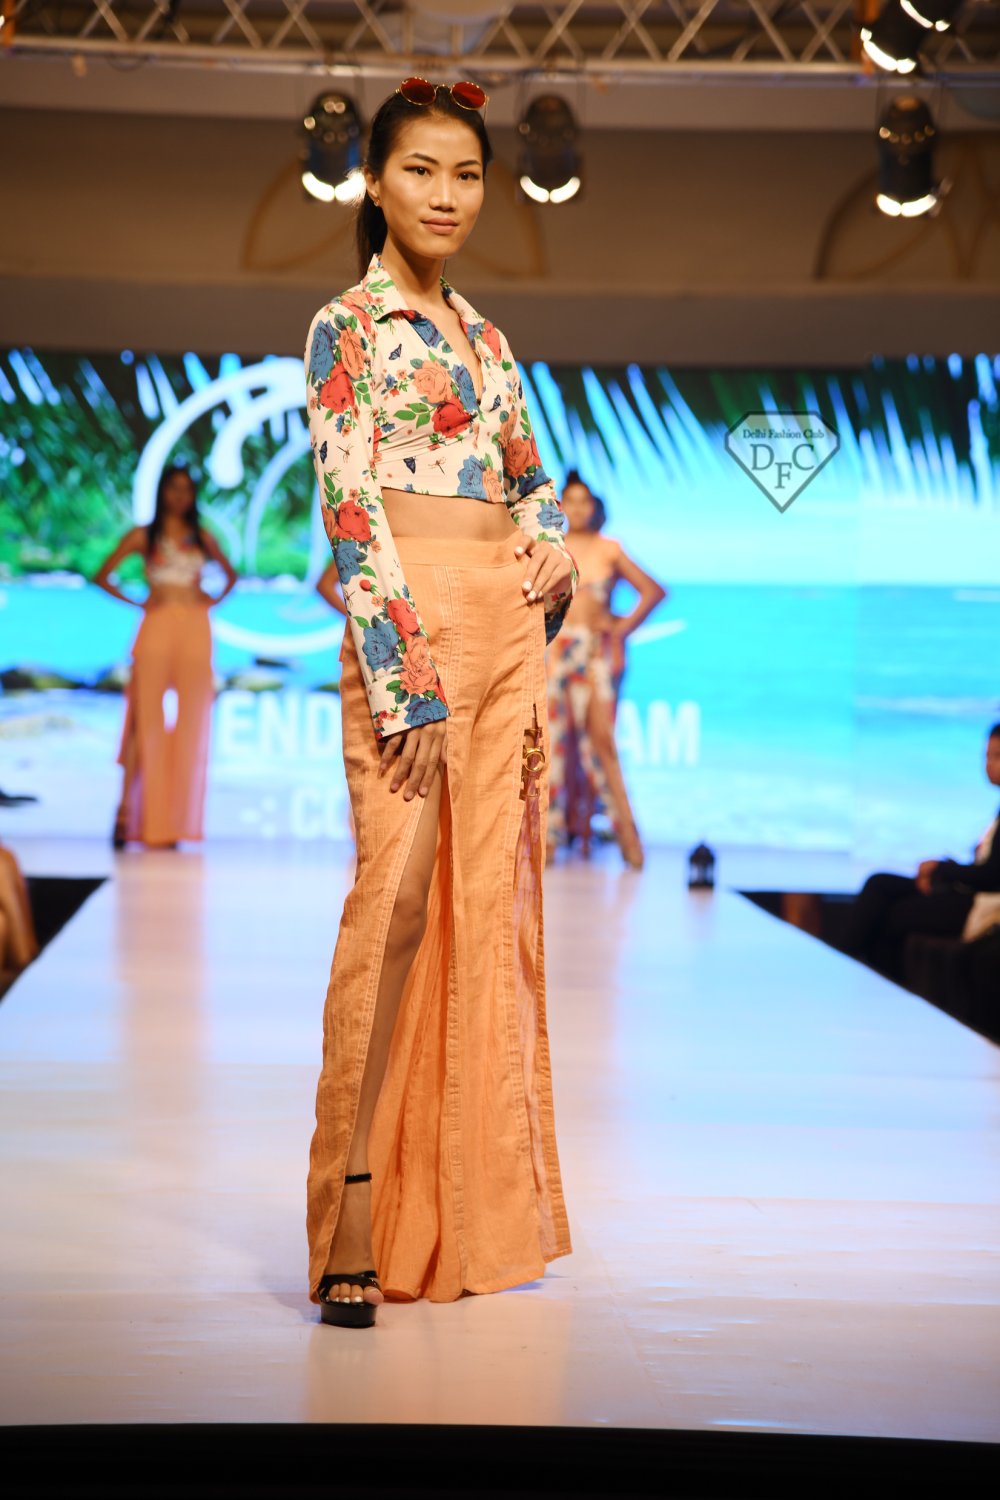 North East Model Wijaidin Pamai walks at International Fashion Week Goa held on 4th to 6th October 2019